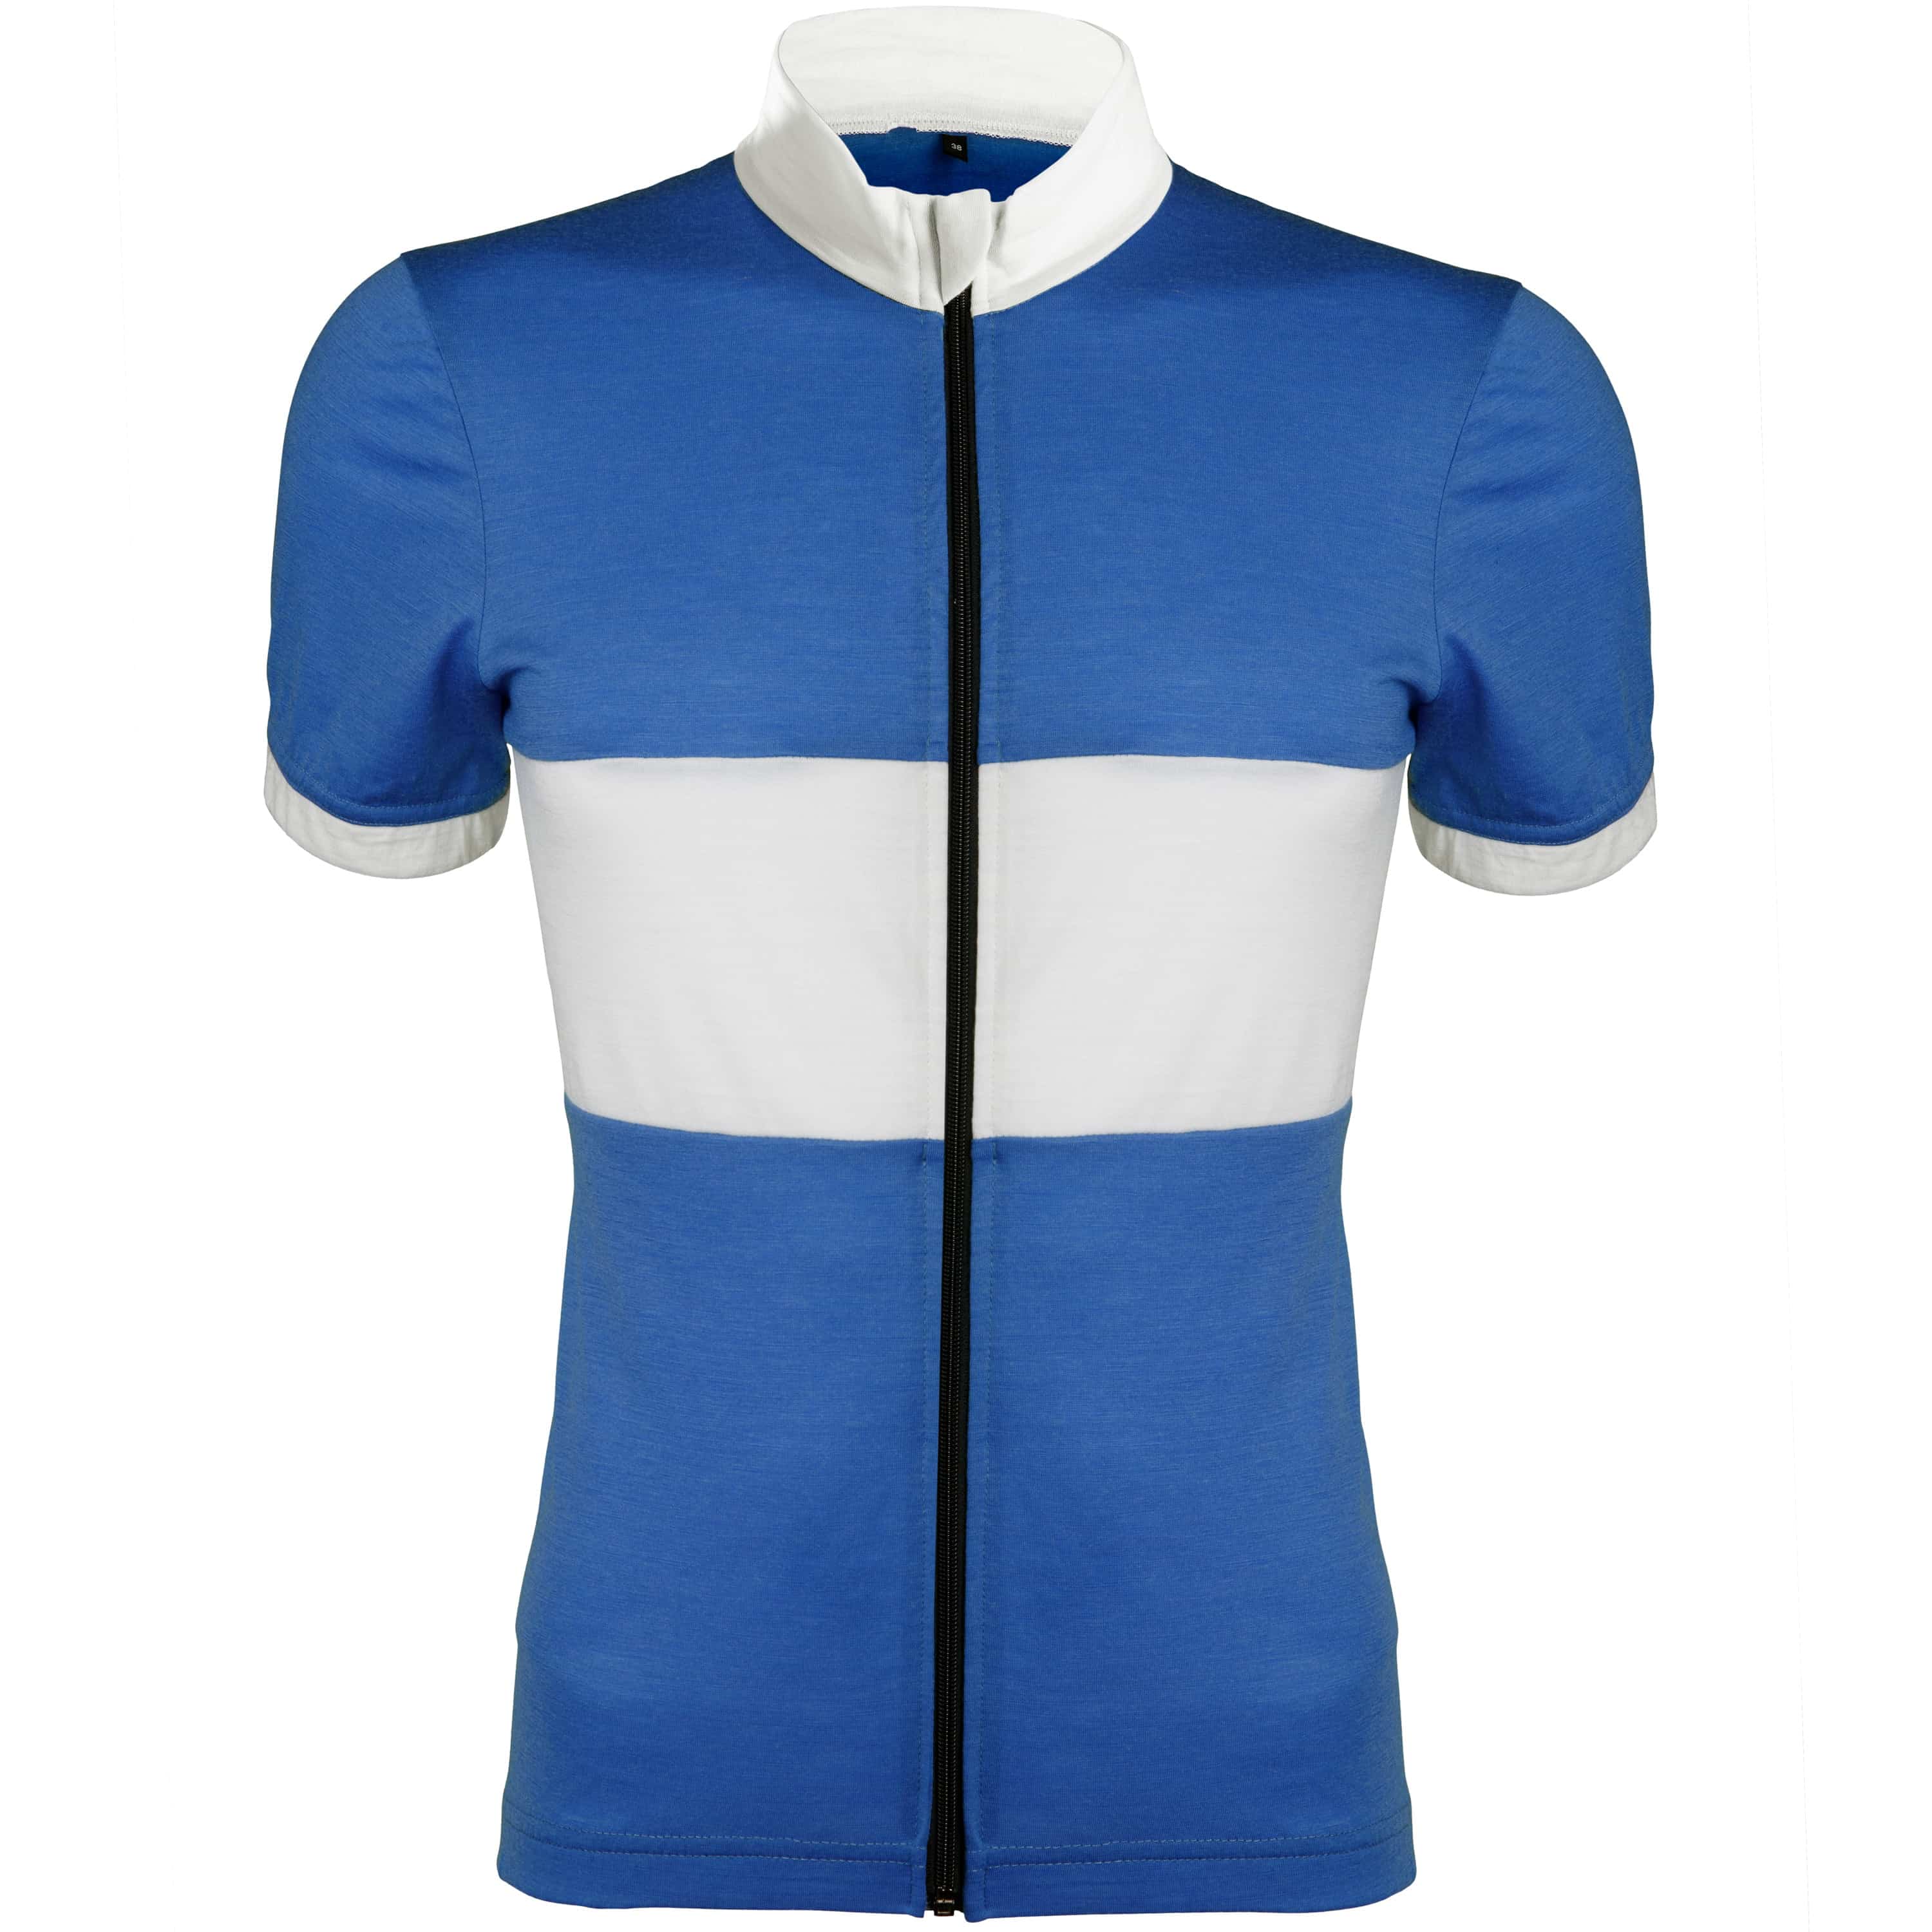 Classic R Merino Wool Cycling Jersey Gulf Blue with White stripe.